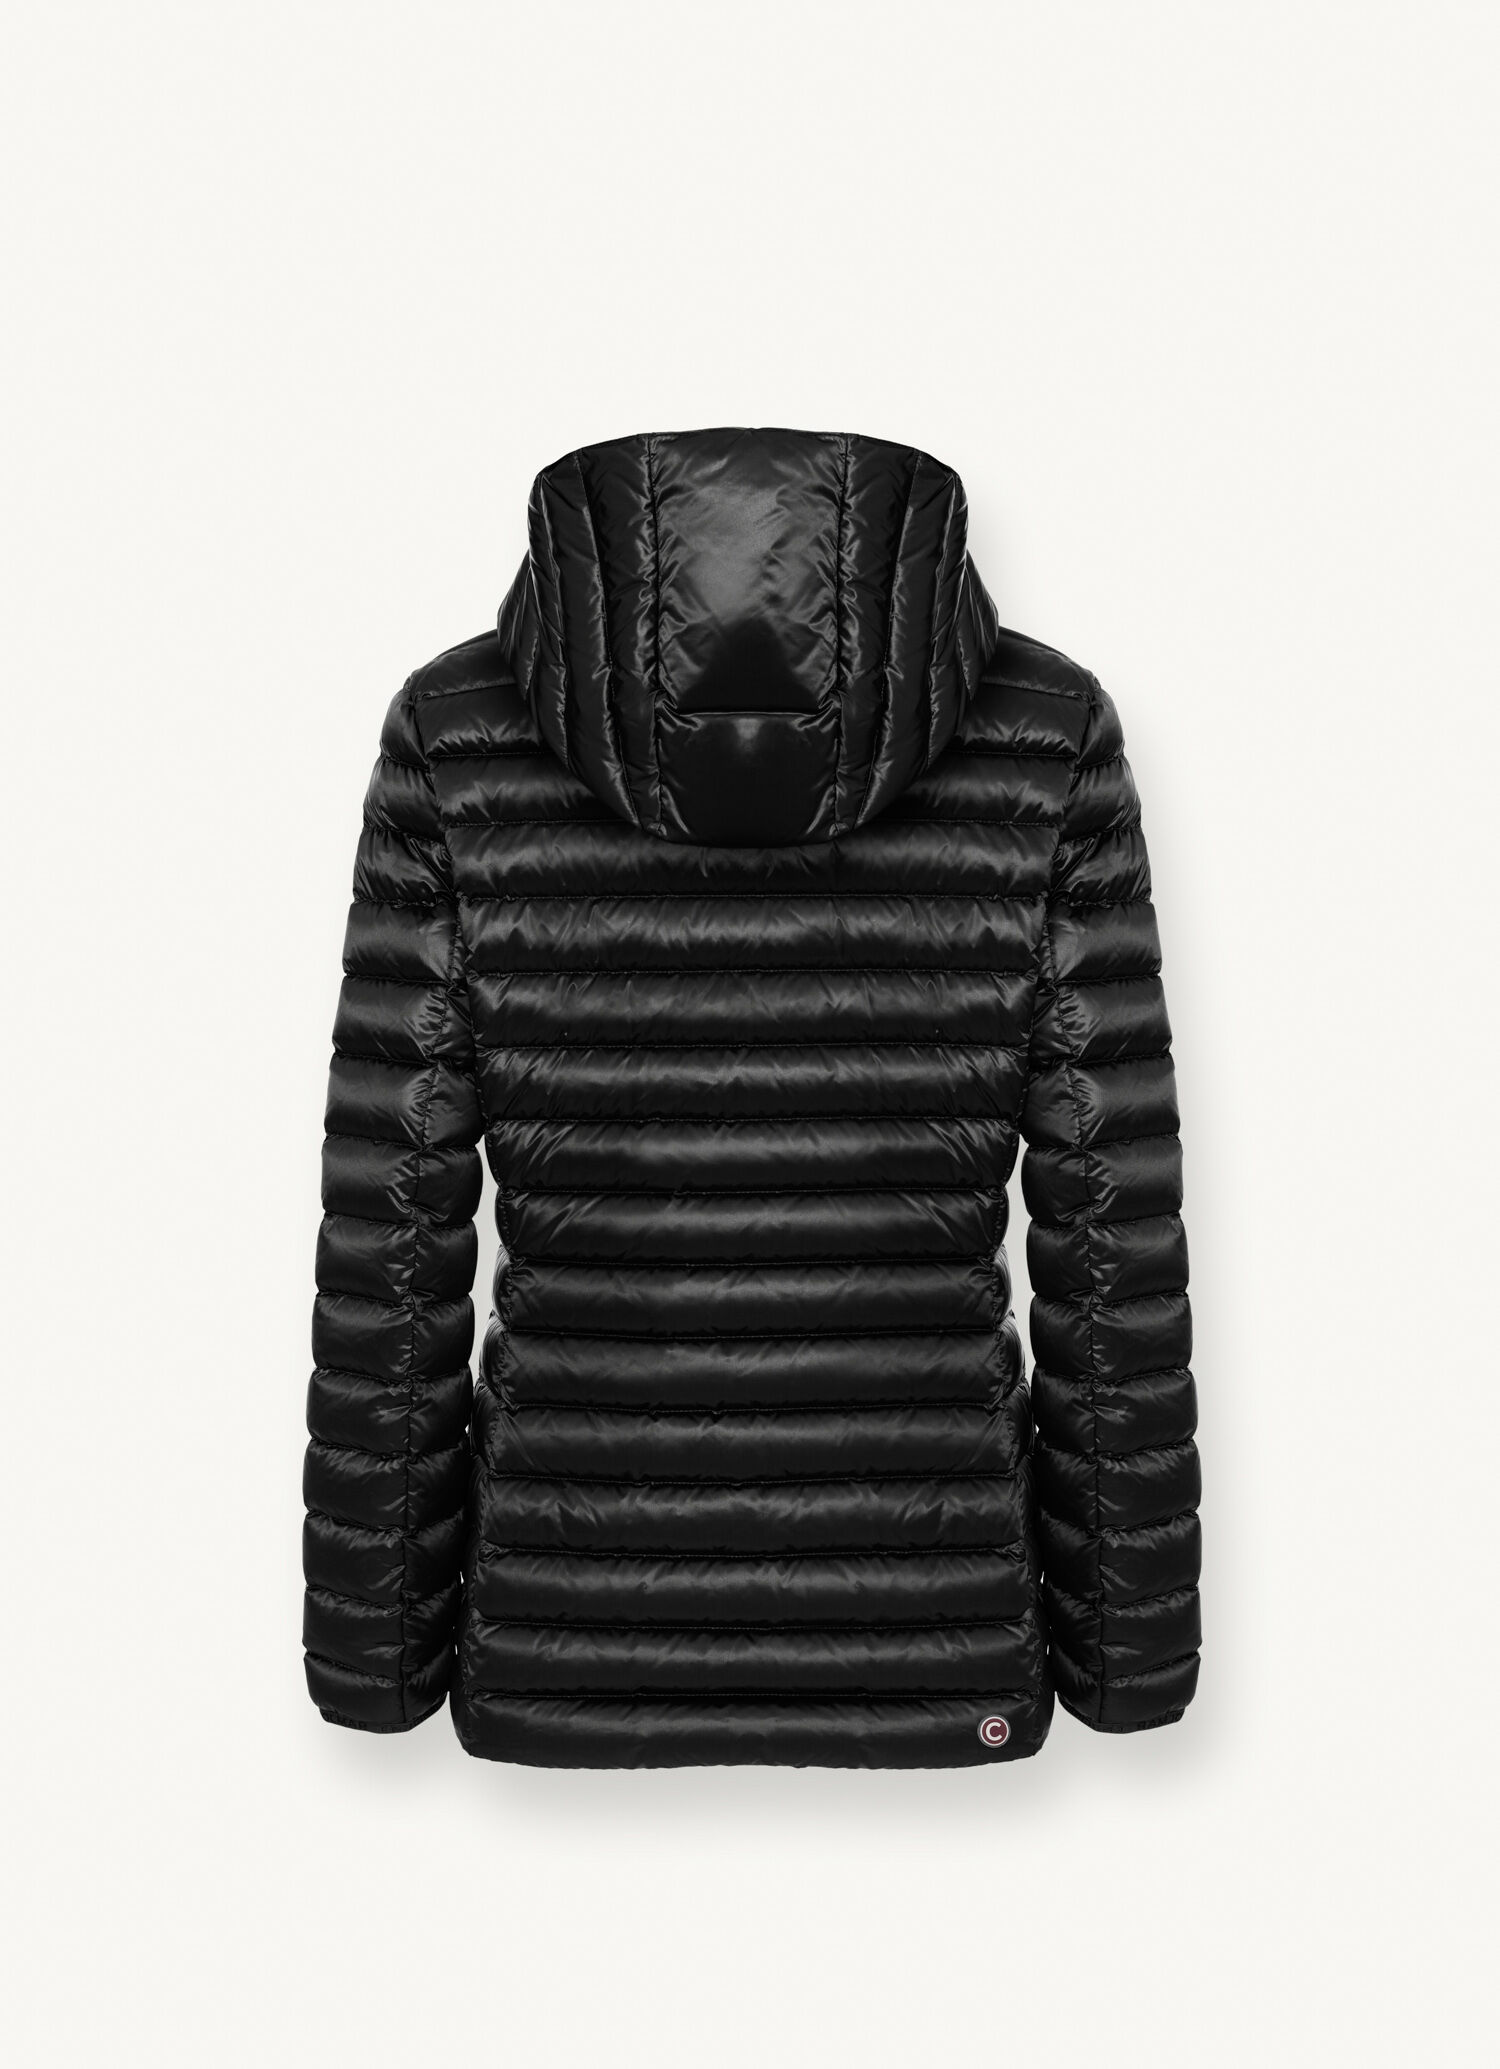 Buy Yeokou Women's Casual Full Zip Up Sherpa Lined Hoodie Sweatshirt Jacket  Coat (Small, Dark Blue) at Amazon.in